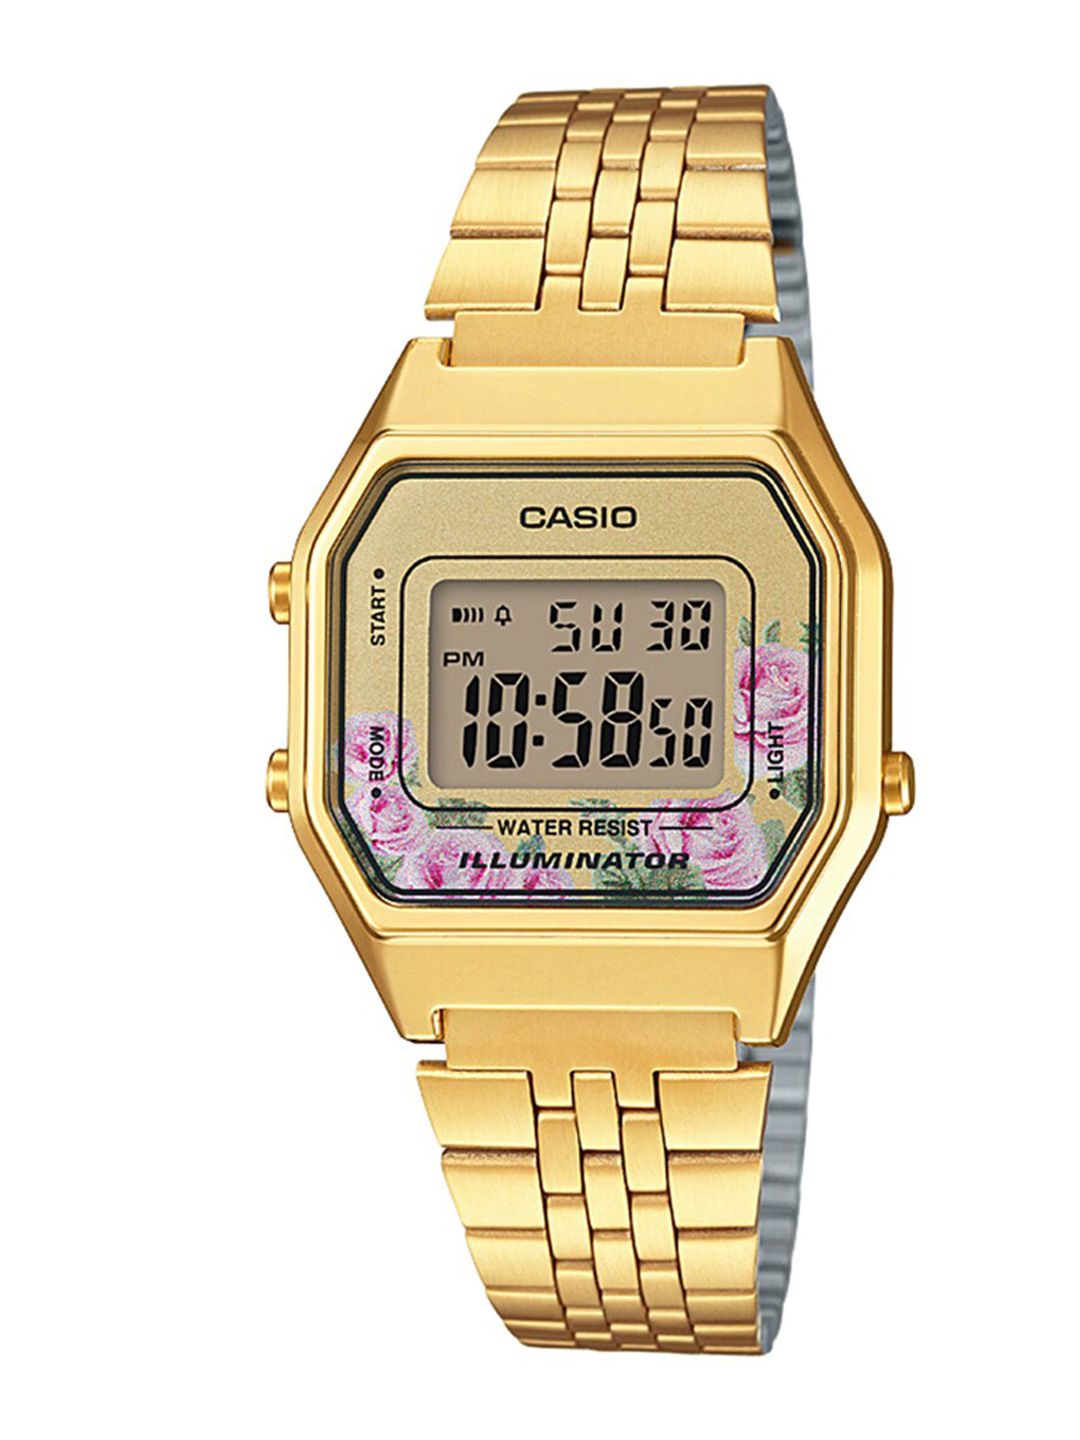 CASIO Unisex Gold-Toned Digital Watch D206 Price in India